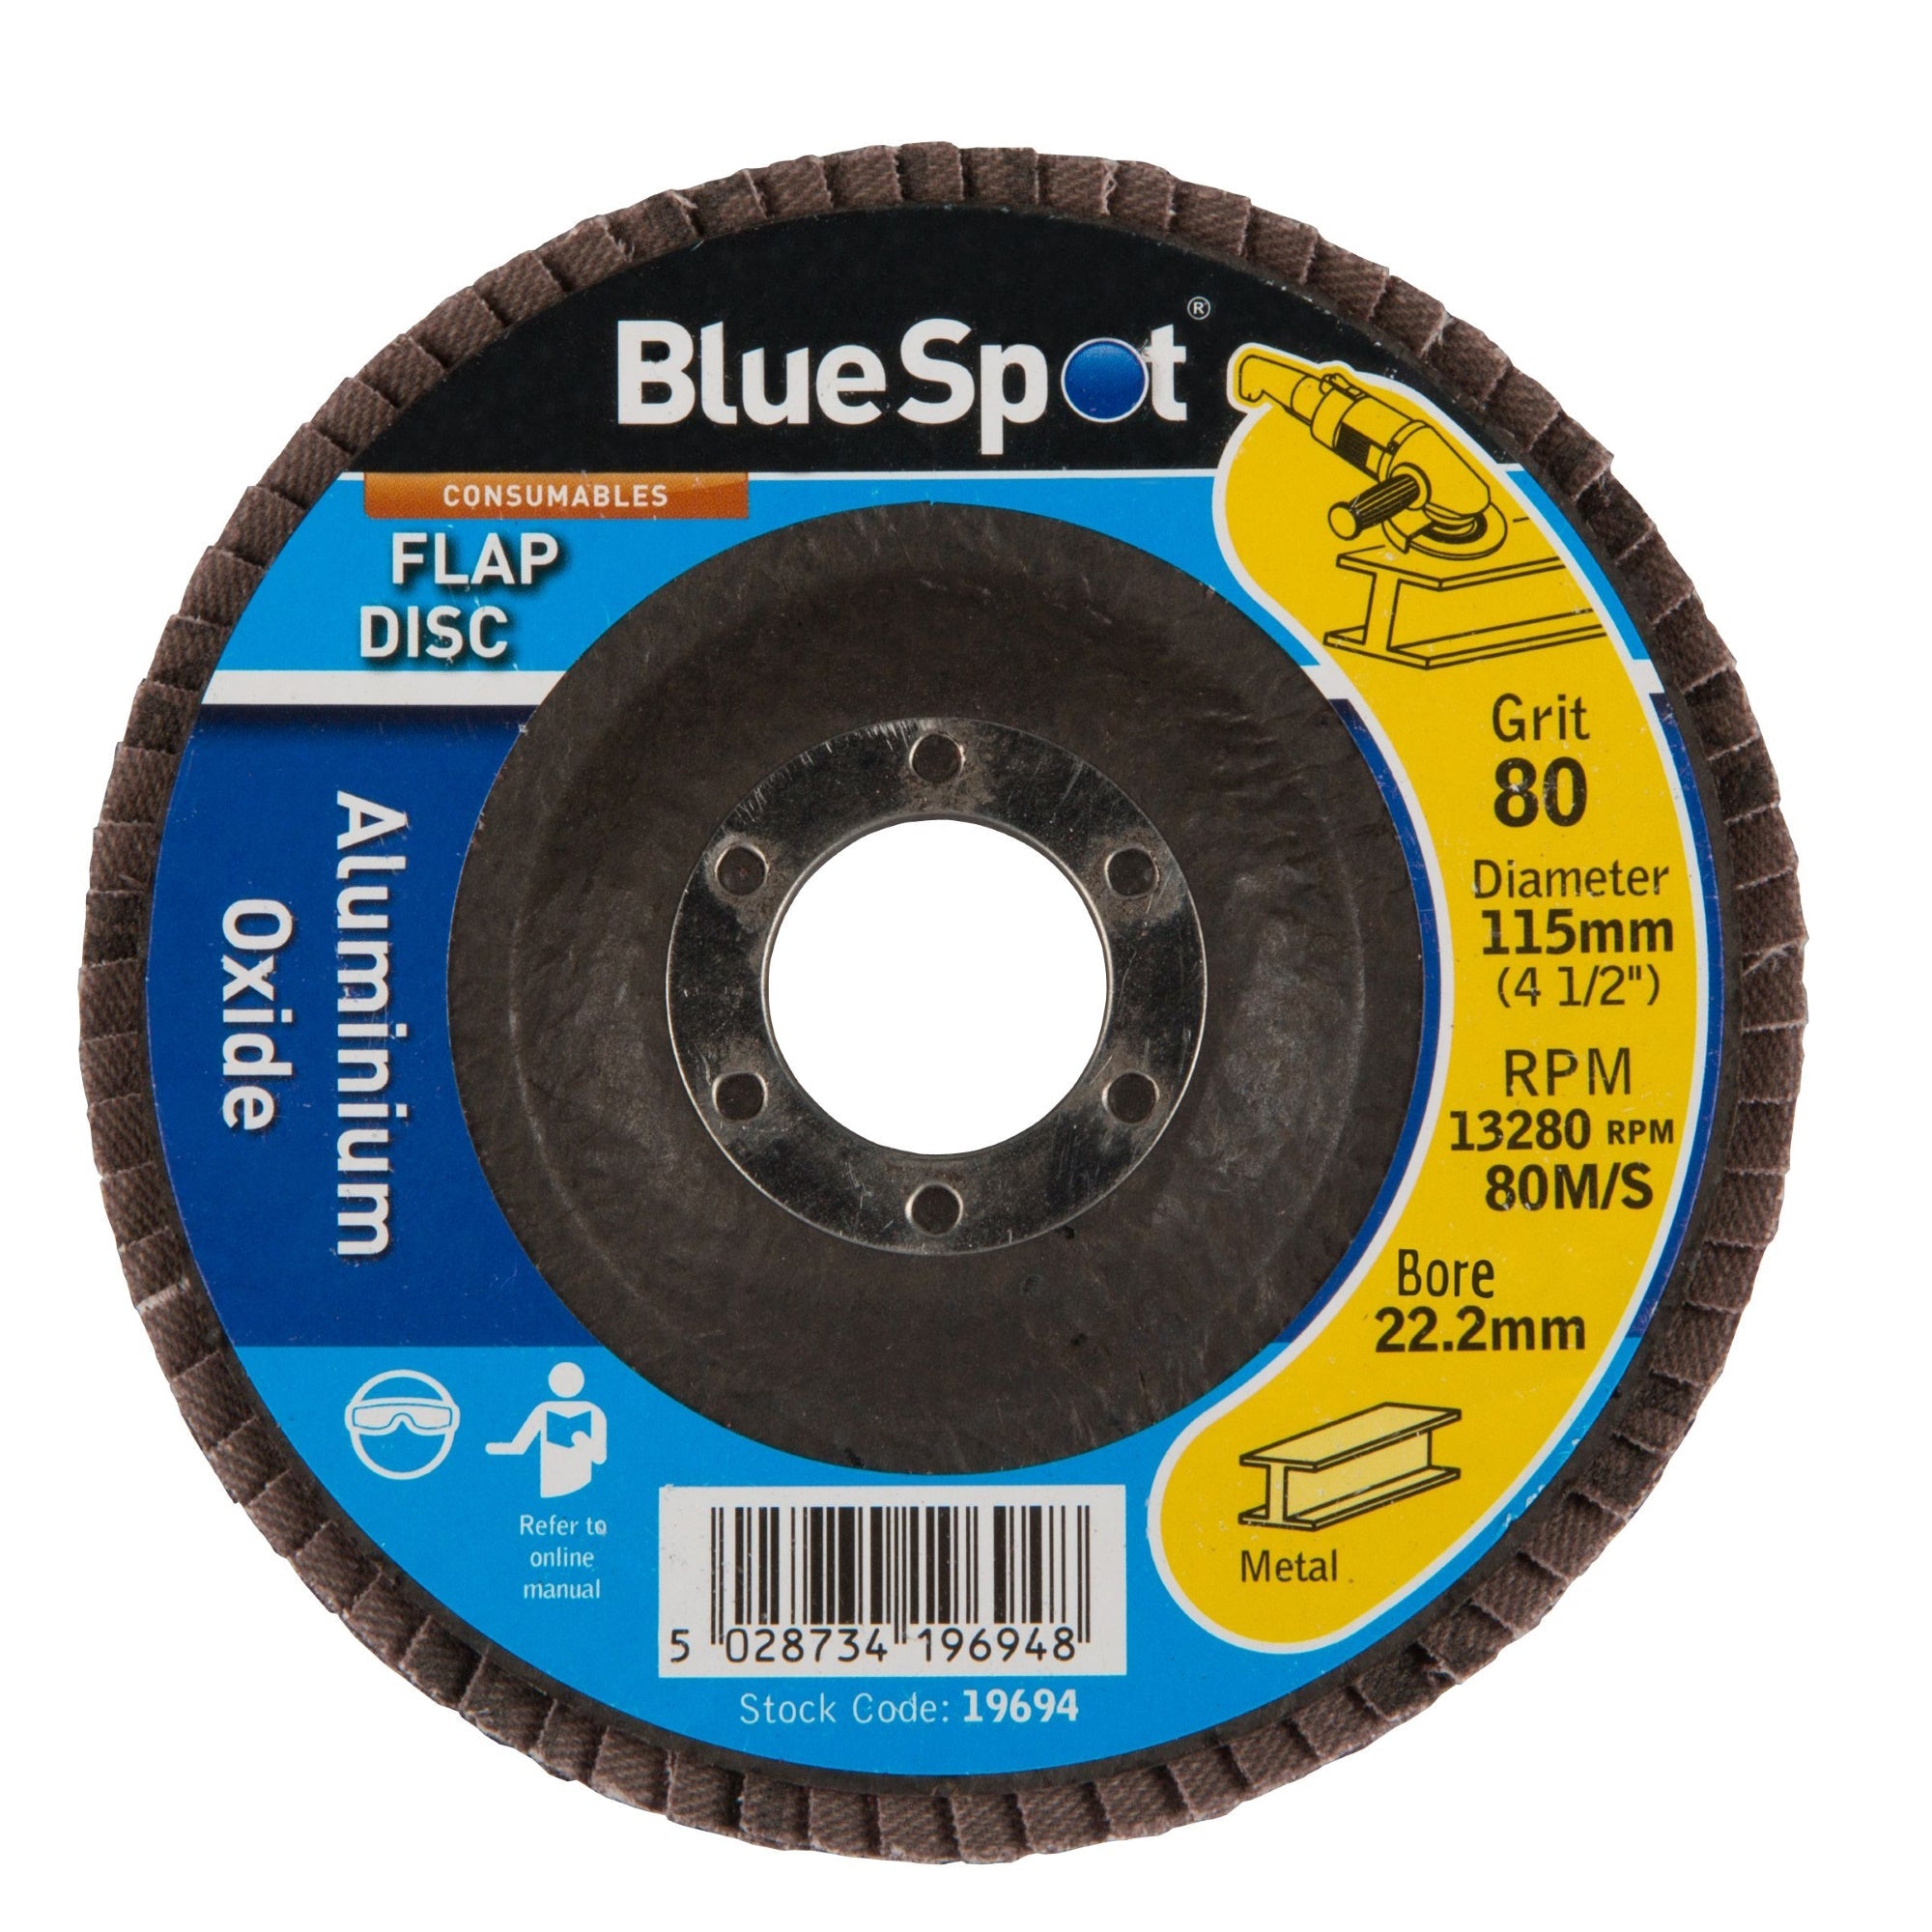 BlueSpot 19694 Aluminium Oxide Flap Disc 115mm - 80 Grit - Premium Sanding from Blue Spot - Just $1.99! Shop now at W Hurst & Son (IW) Ltd